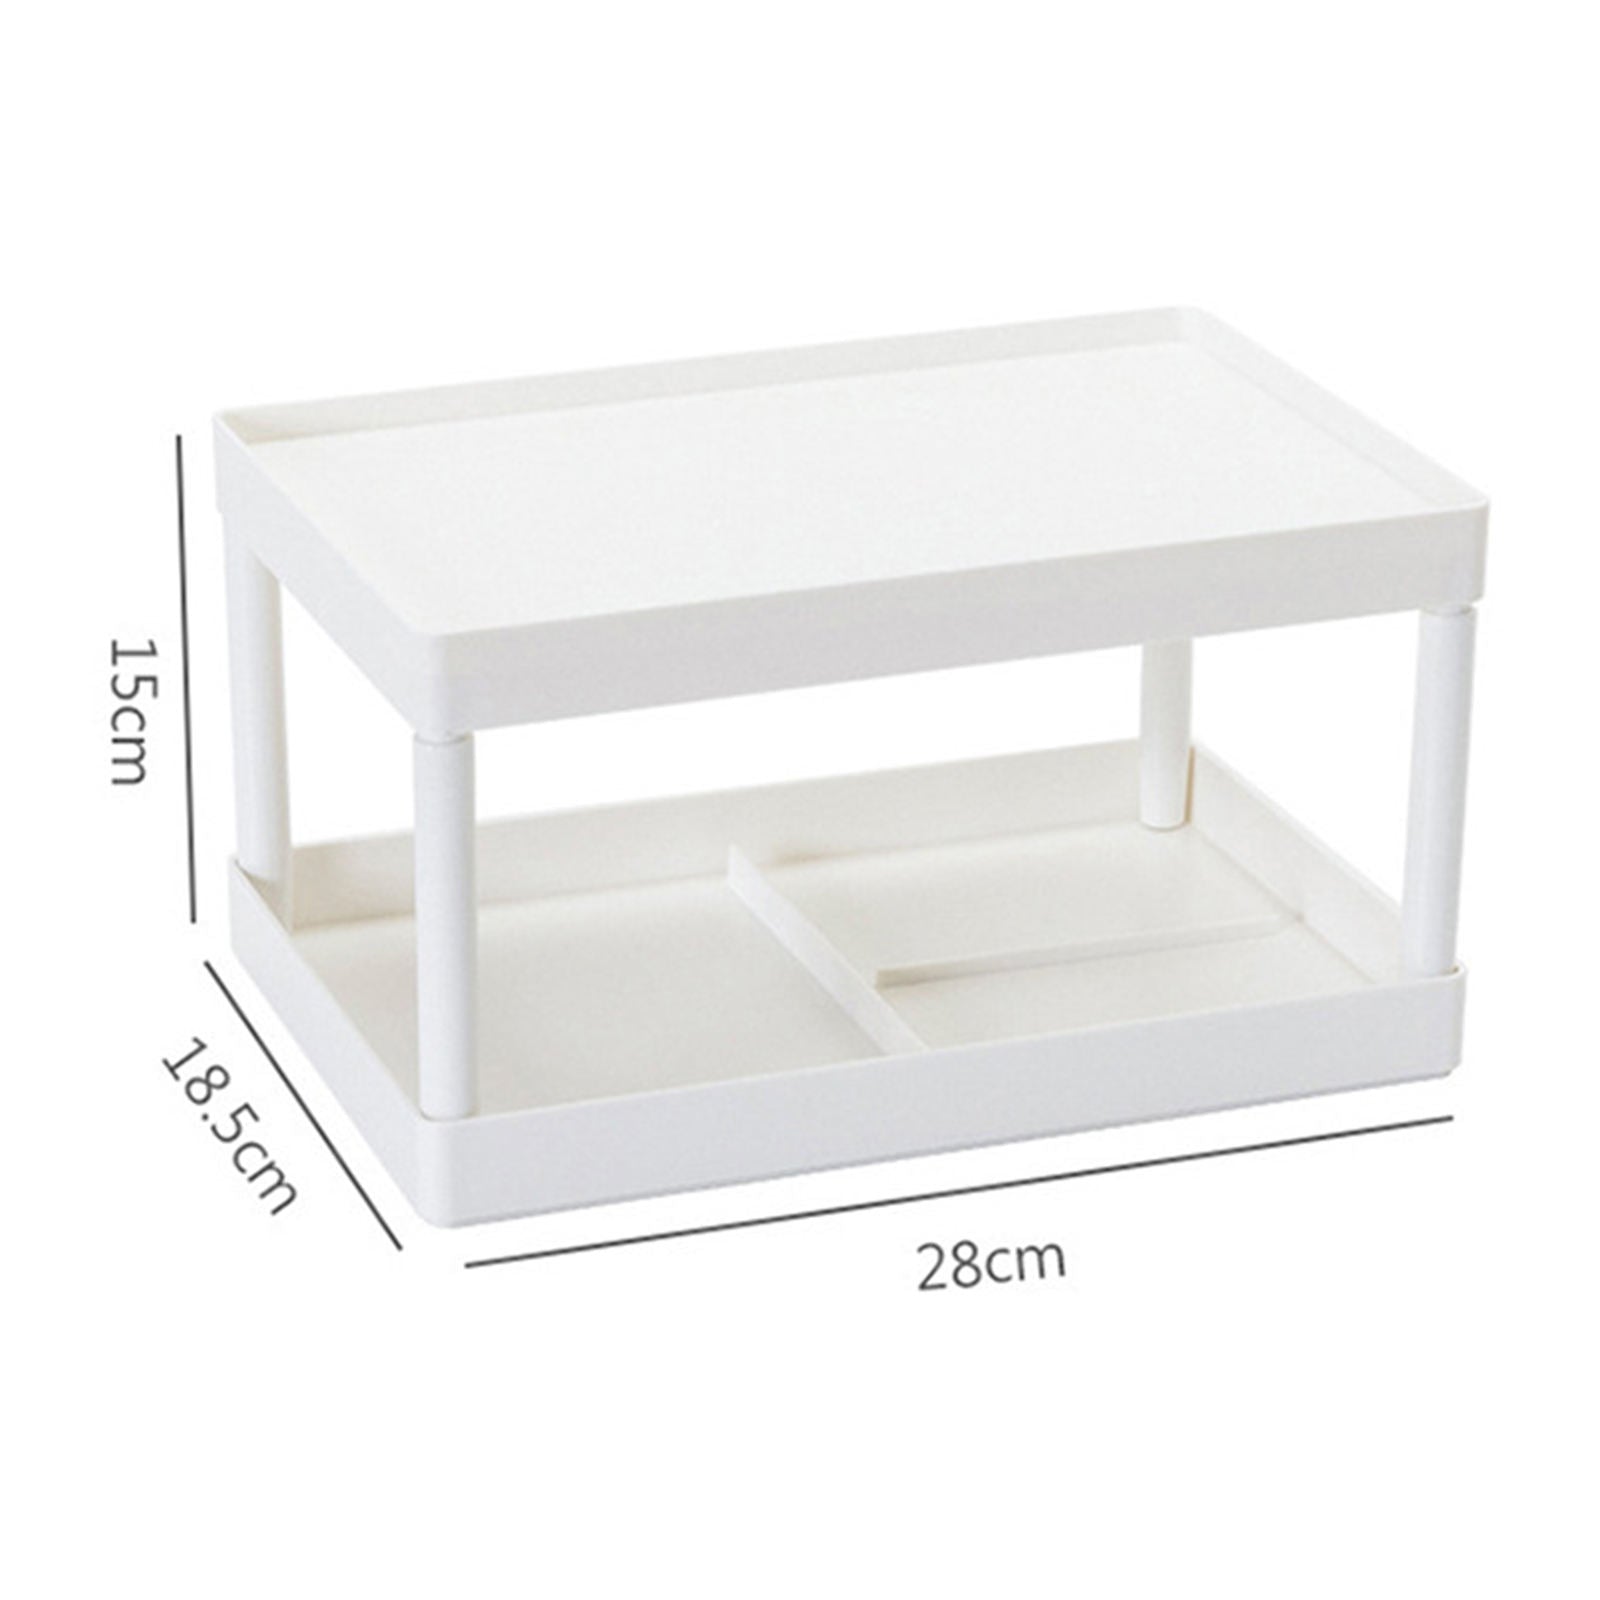 2 Layer Desk Table Organizer Holder Countertop Storage Shelf for Dorm Room